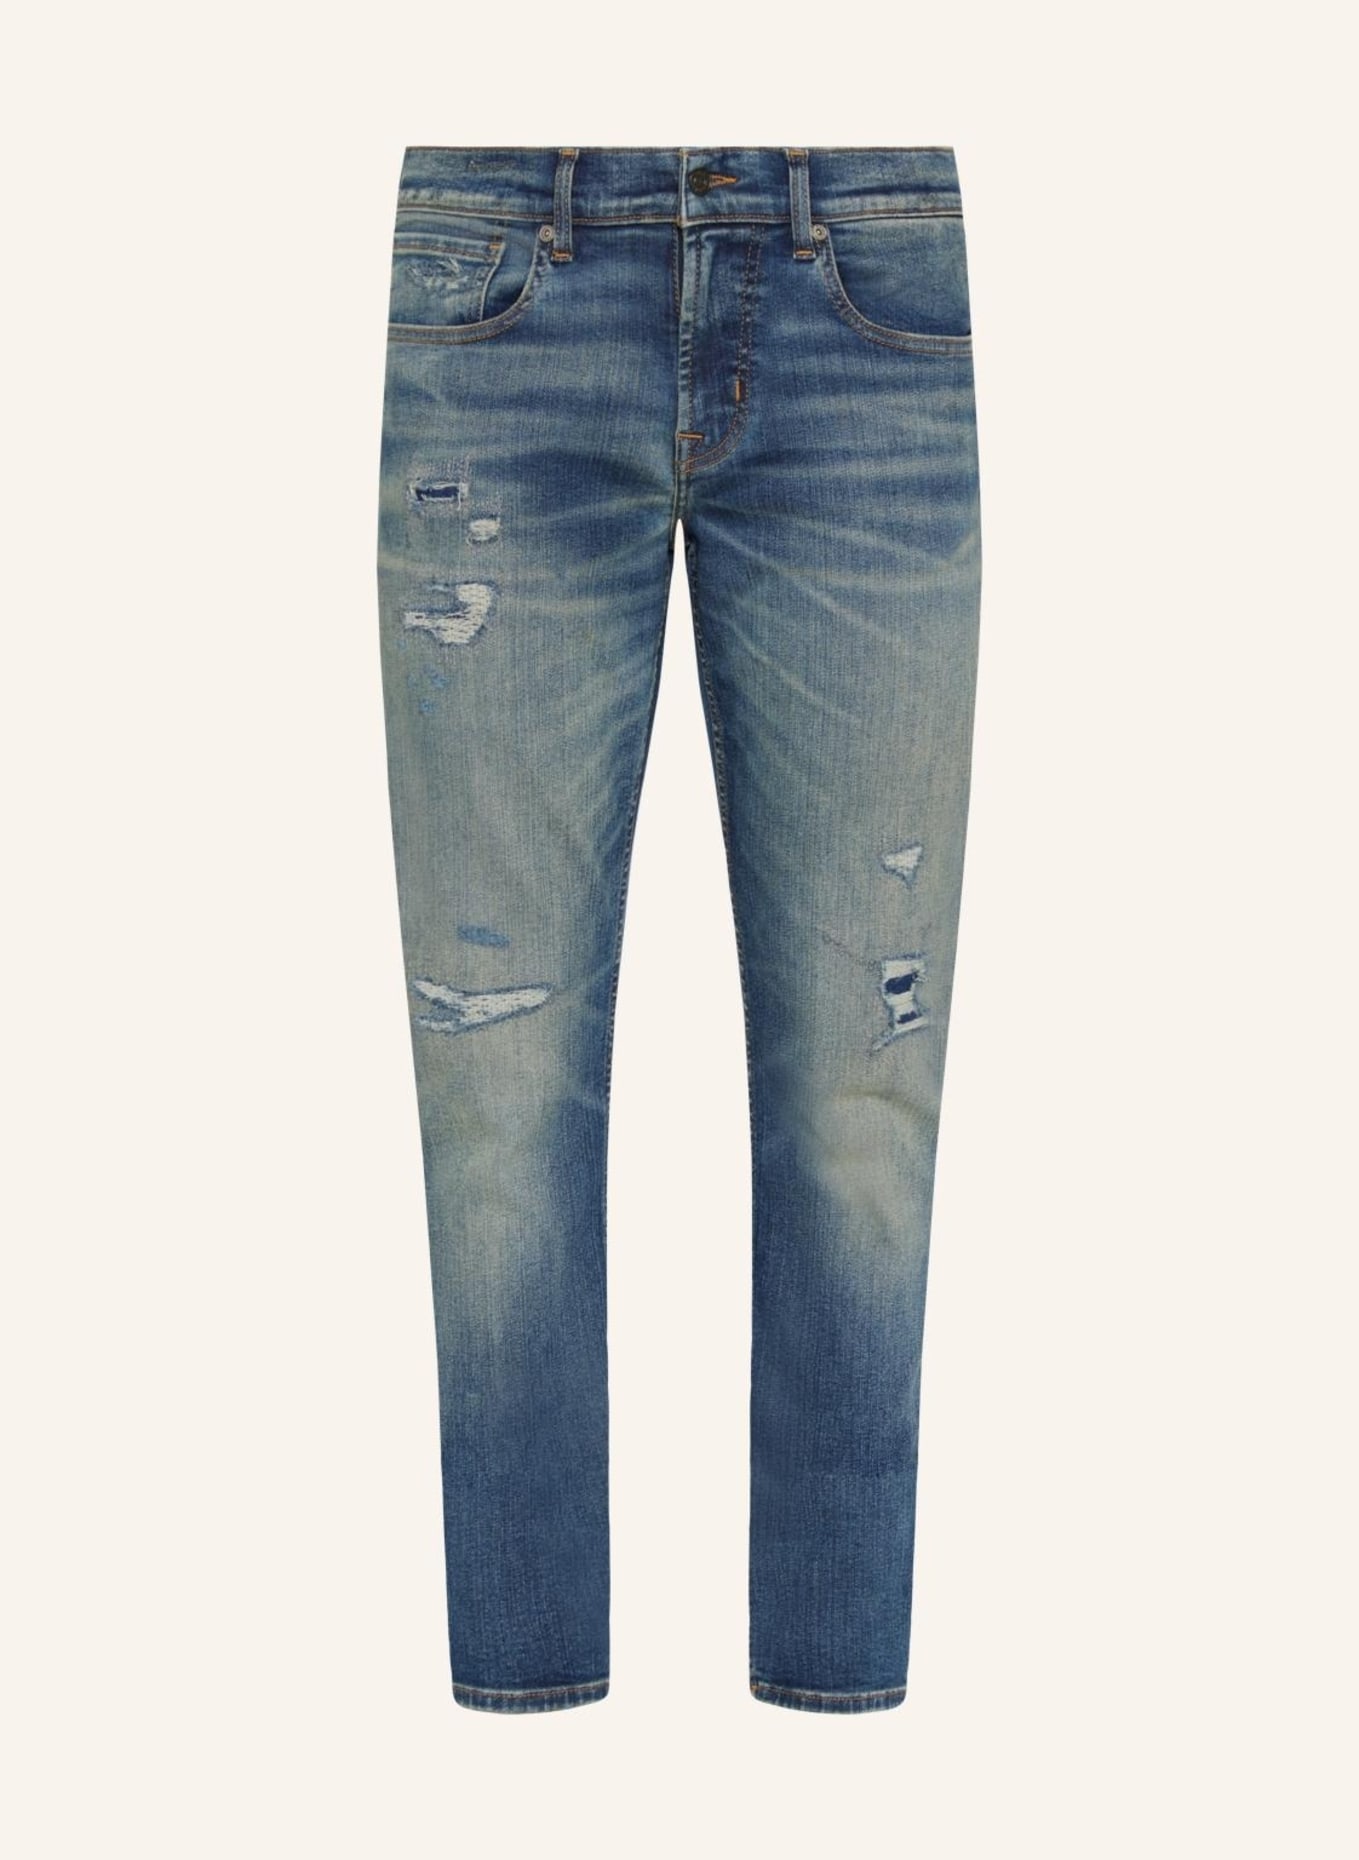 7 for all mankind Jeans SLIMMY TAPERED Slim fit, Farbe: BLAU (Bild 1)